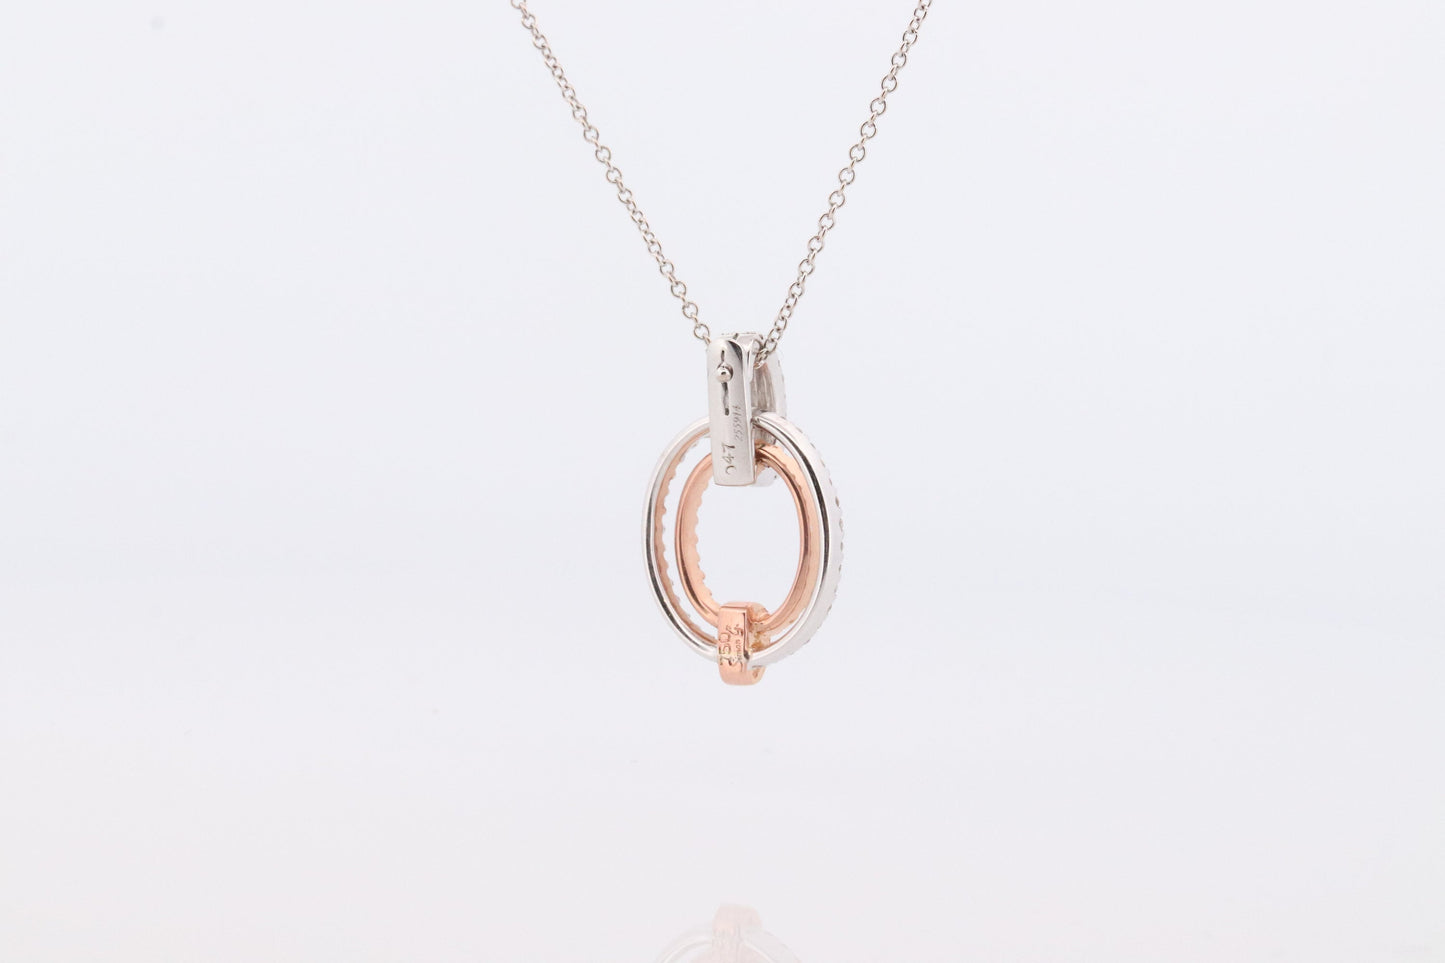 SIMON G 18k diamond Loop Pendant. 18k White and Rose Gold Pave Diamond Necklace. Double Halo Pendant. st(242)